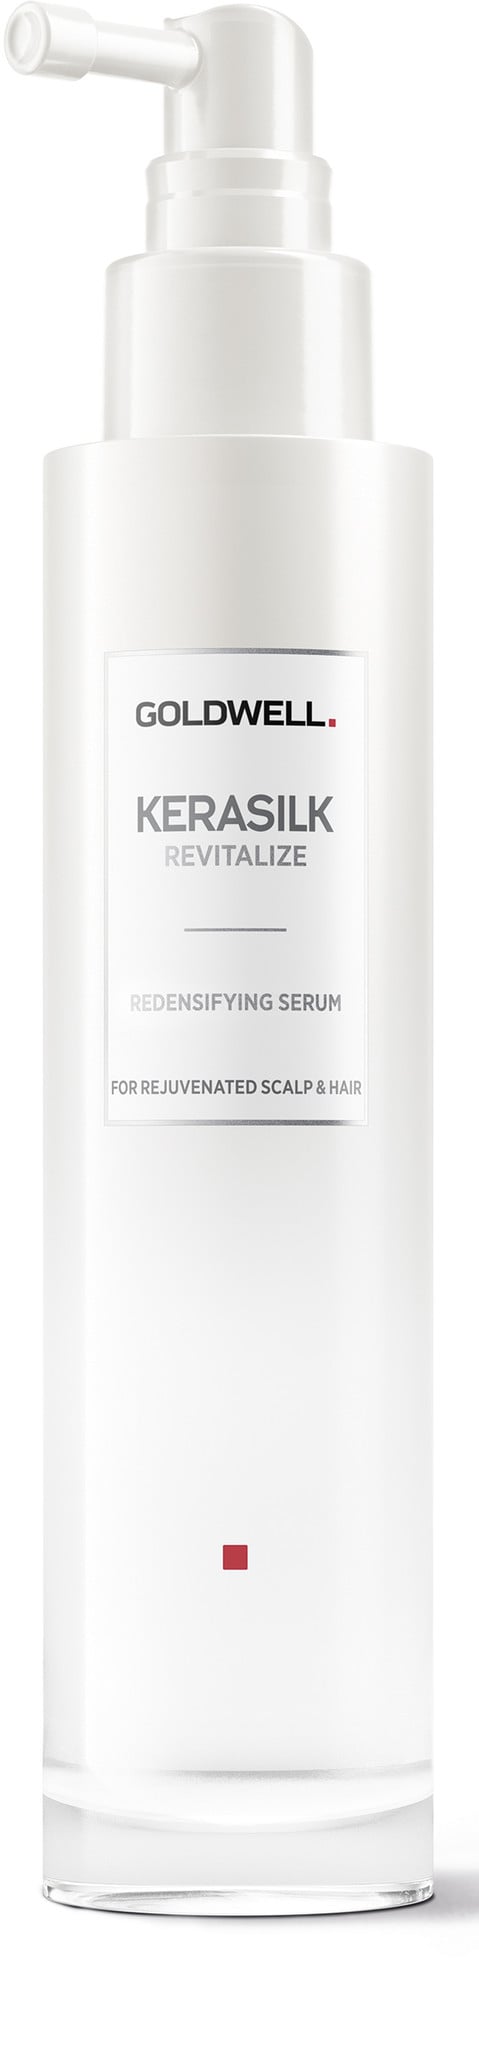 Goldwell - Kerasilk Revitalize - Redensifying Serum - 100 ml